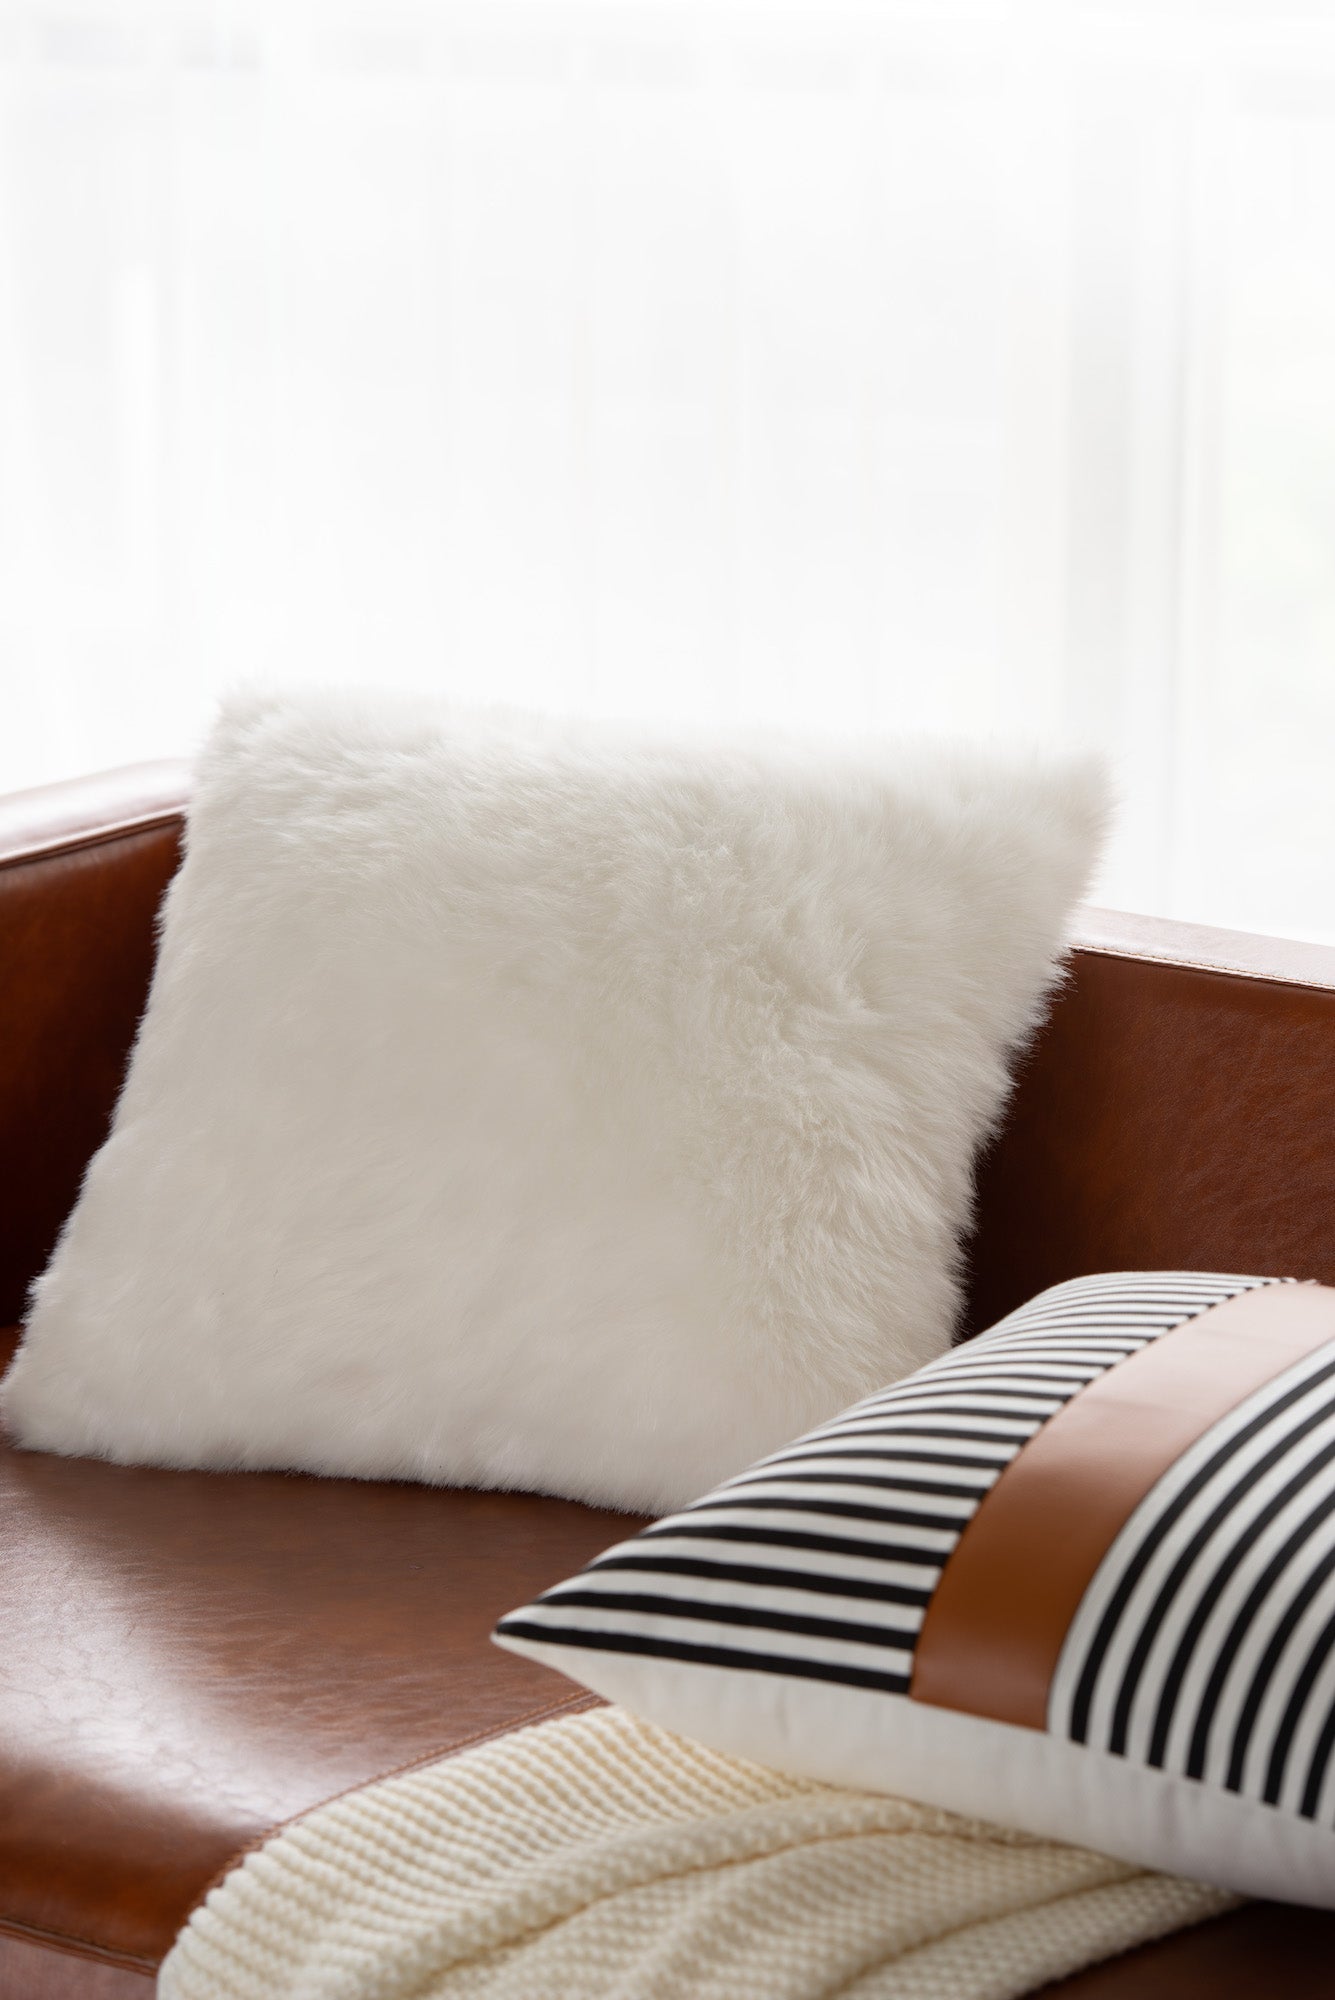 Faux Leather Pillow Cover, Modern Design Stripes, Camel Black, 18"x18"